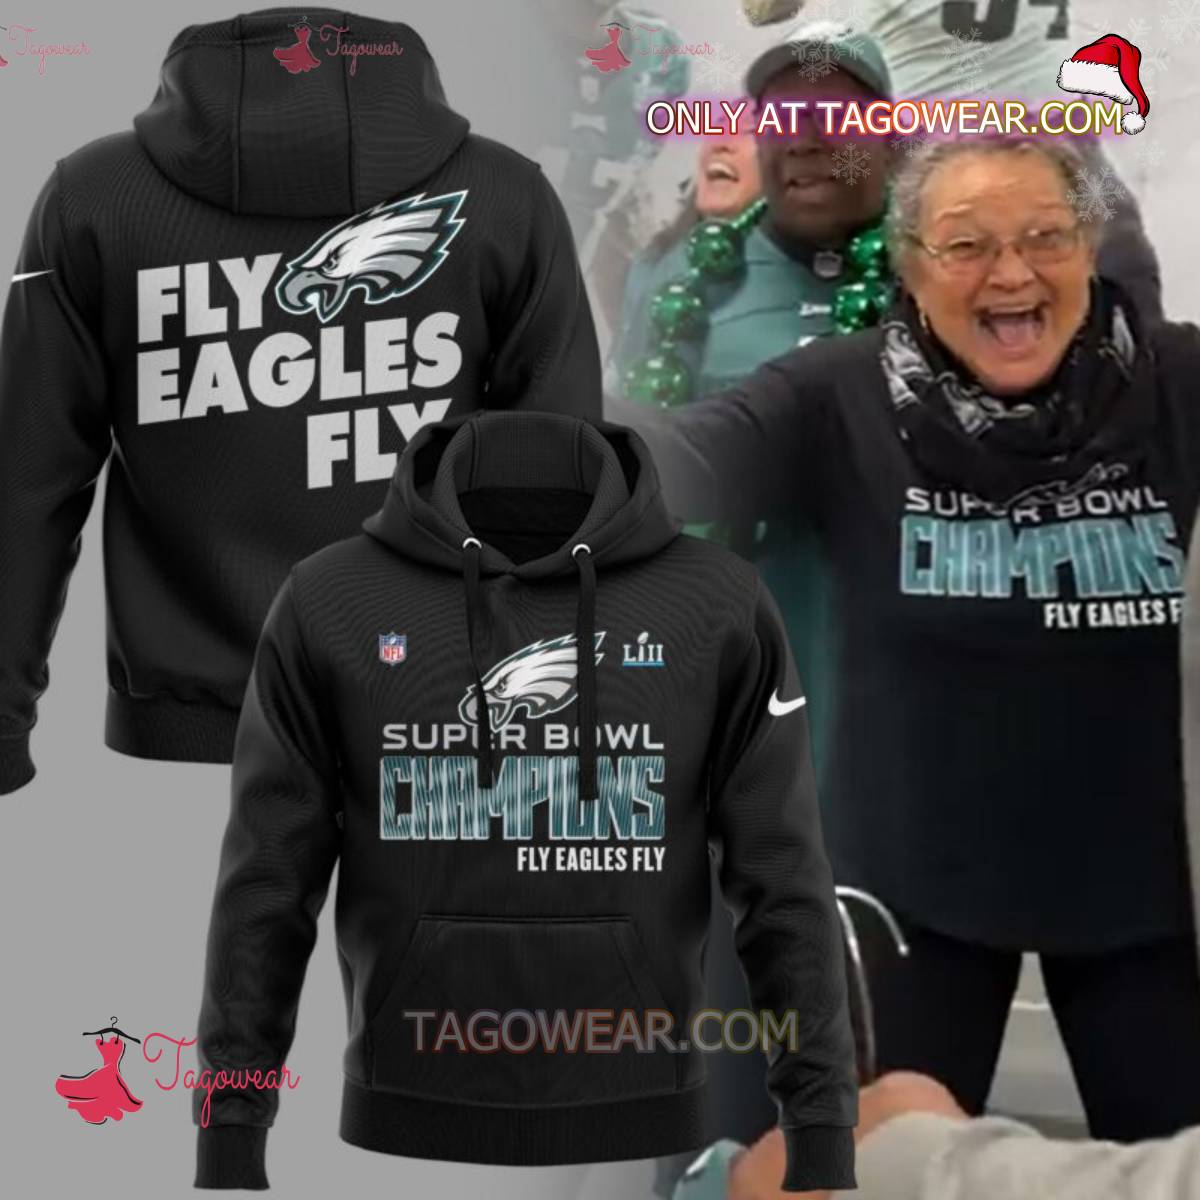 Mrs Marie Nfl Philadelphia Eagles Big Fans Super Bowl Champions Fly Eagles Fly Hoodie